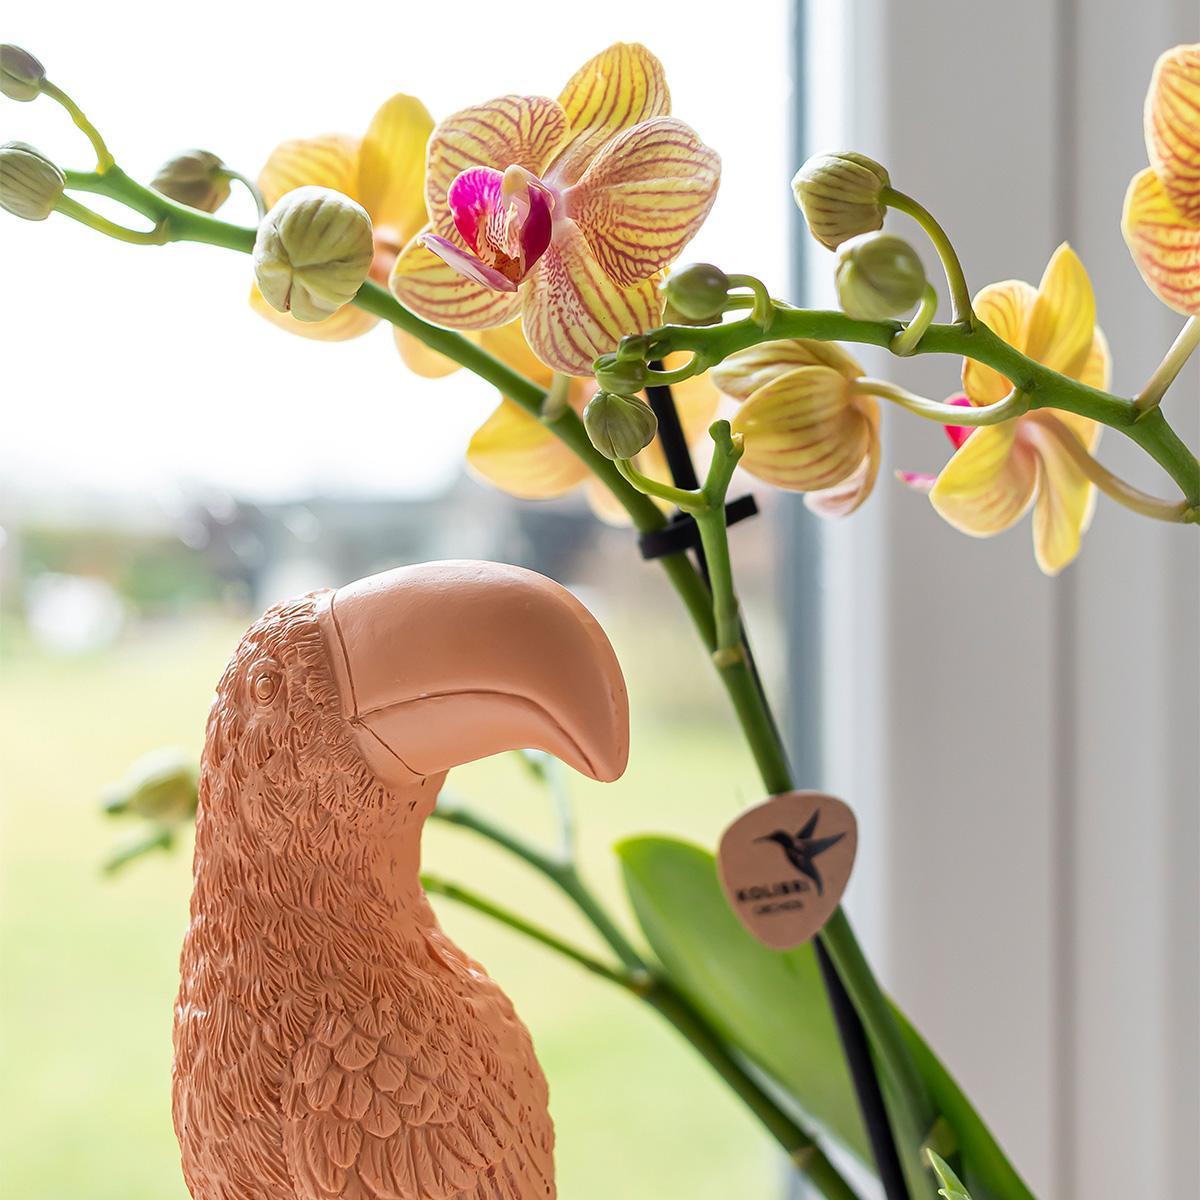 Kolibri Home | Ornament - Decoratie beeld Toucan peach